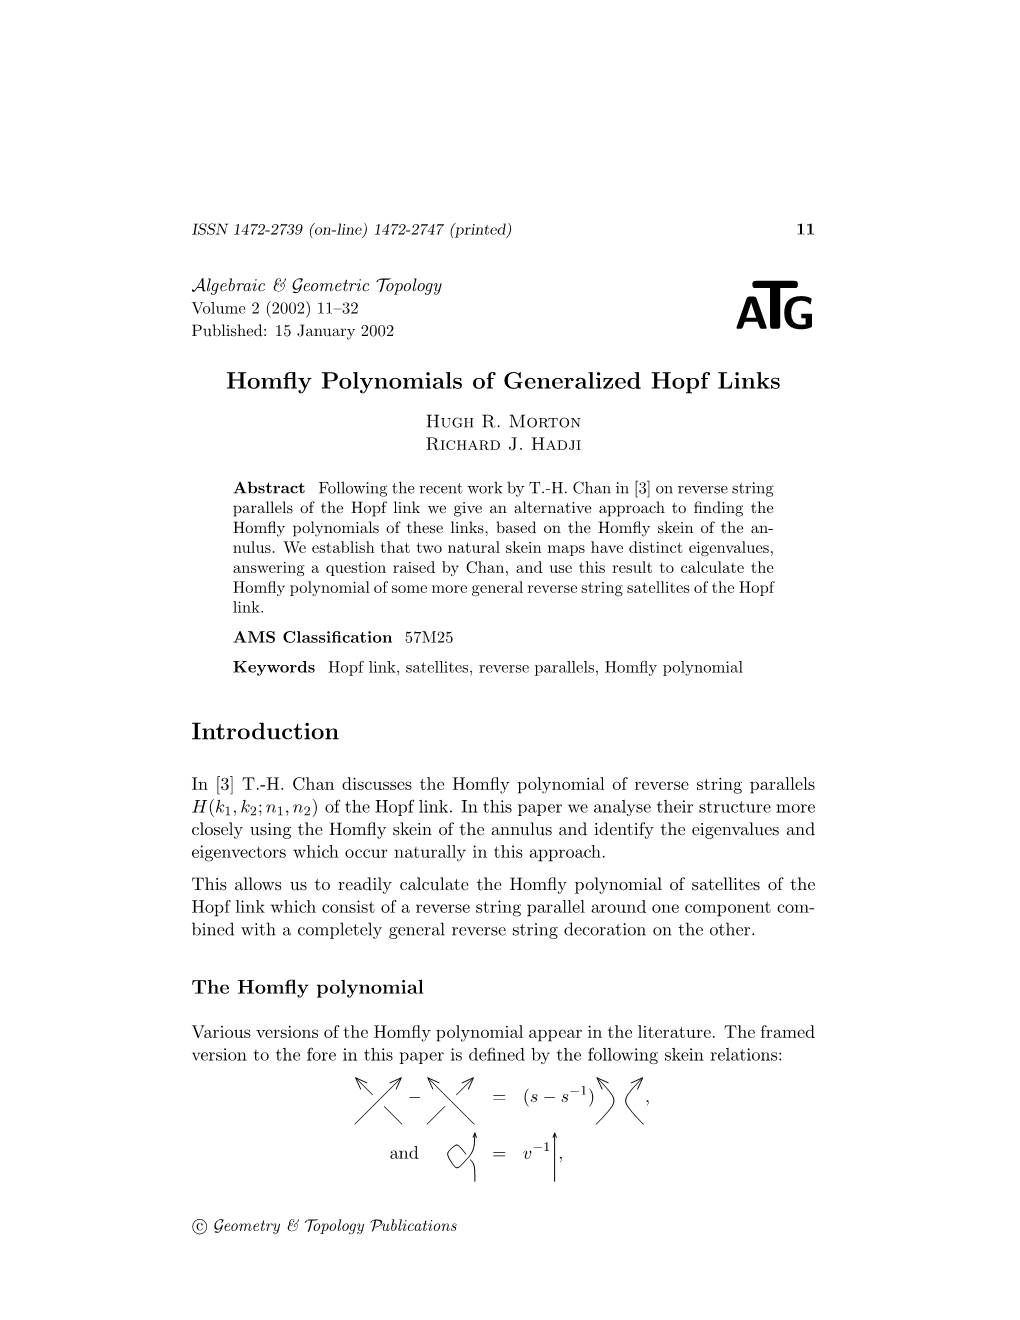 Homfly Polynomials of Generalized Hopf Links Introduction